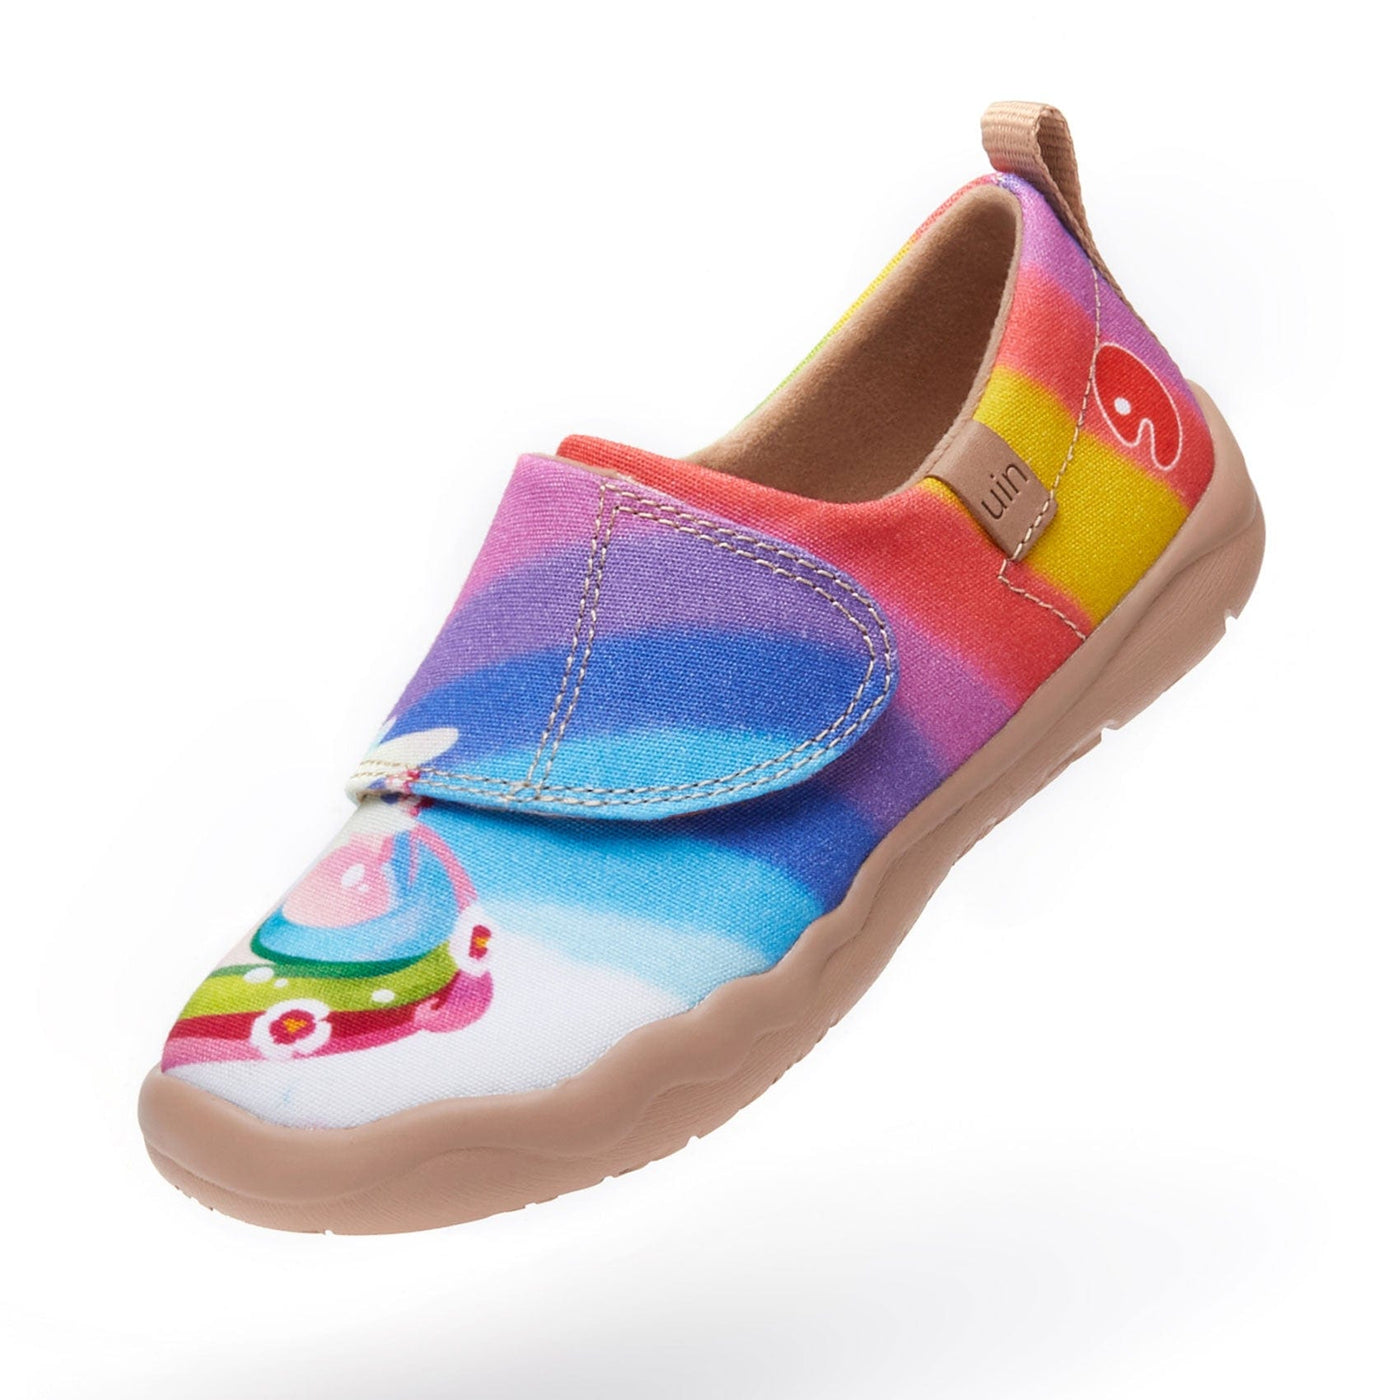 UIN Footwear Kid Dreamy Unicorn Toledo I Kid Canvas loafers